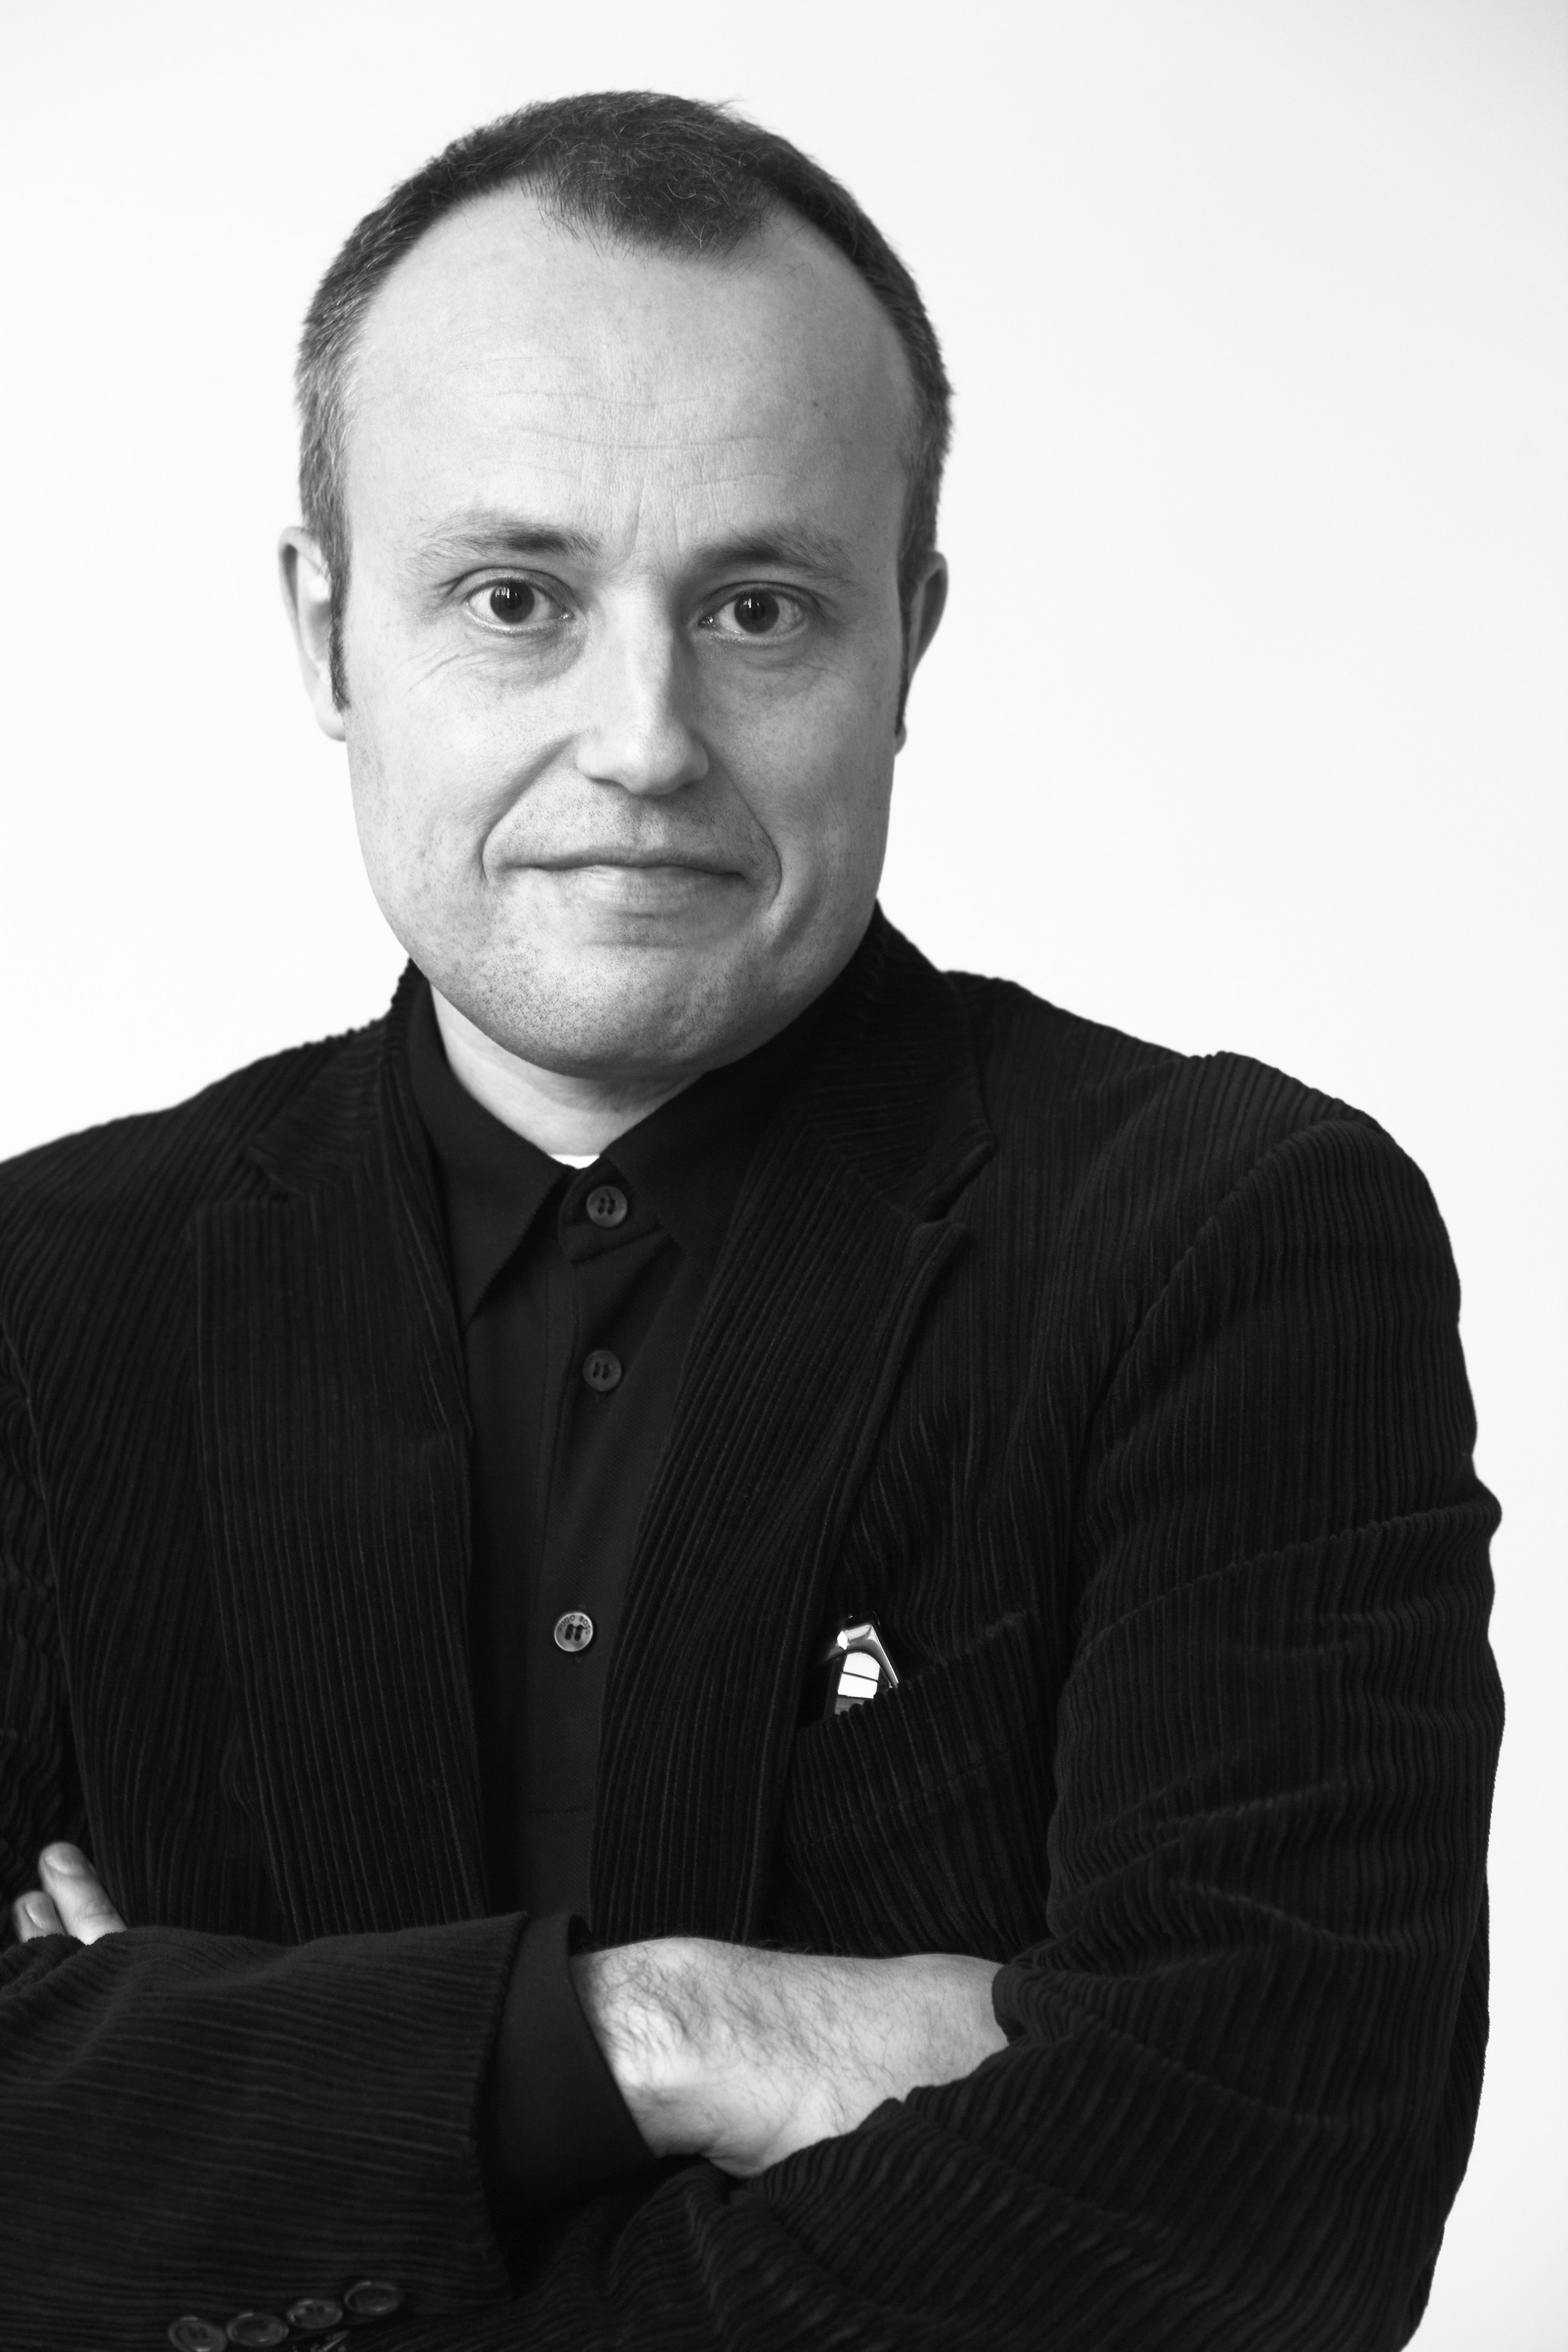 Peter Jansson